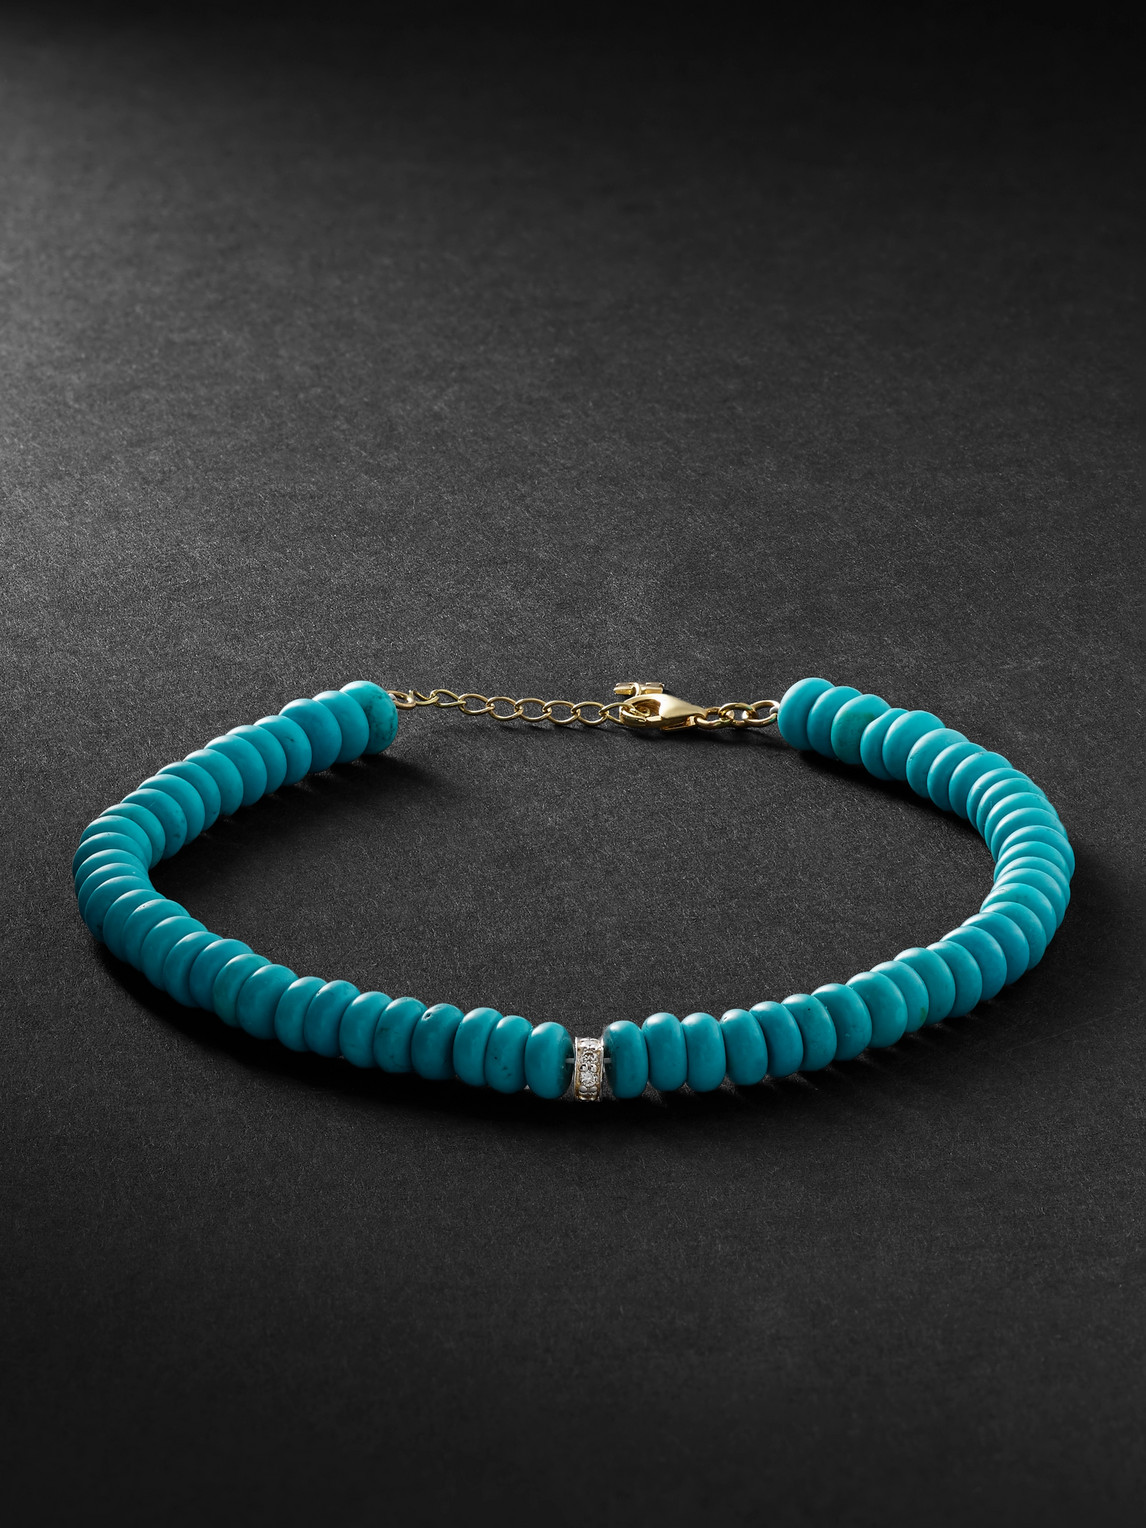 Mateo - Gold, Turquoise and Diamond Beaded Bracelet - Men - Blue von Mateo